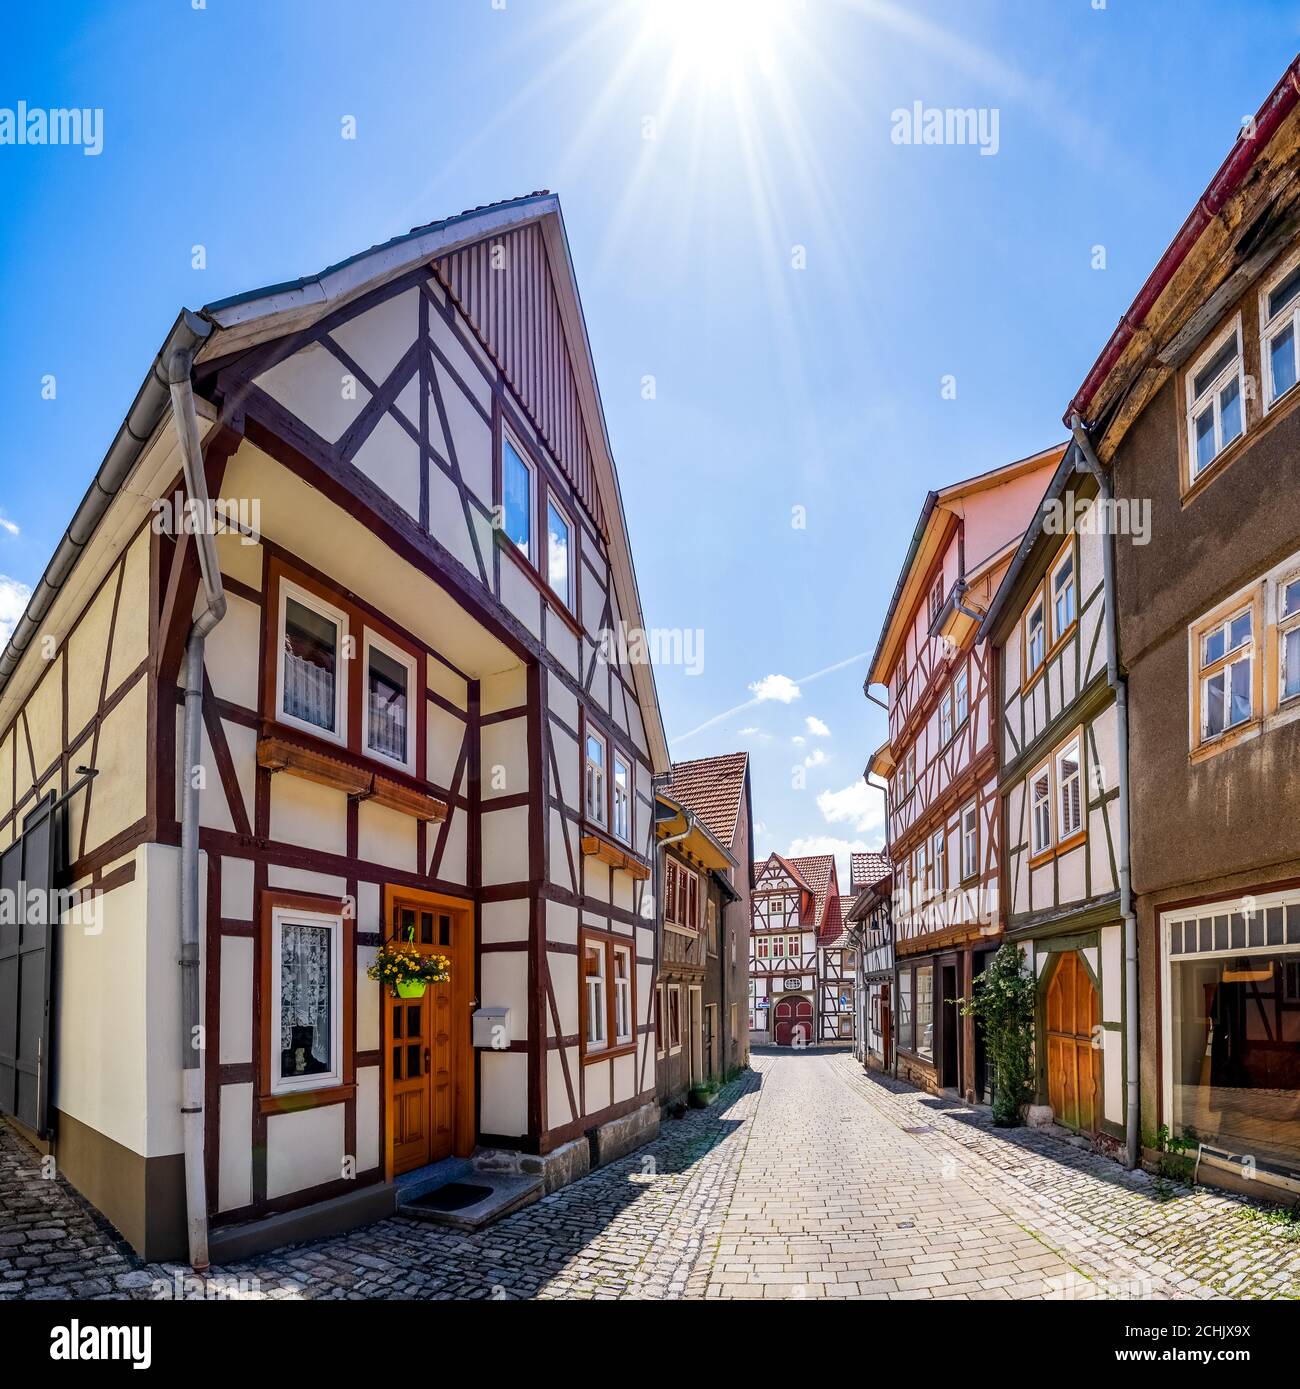 Historical city of Treffurt, Germany Stock Photo